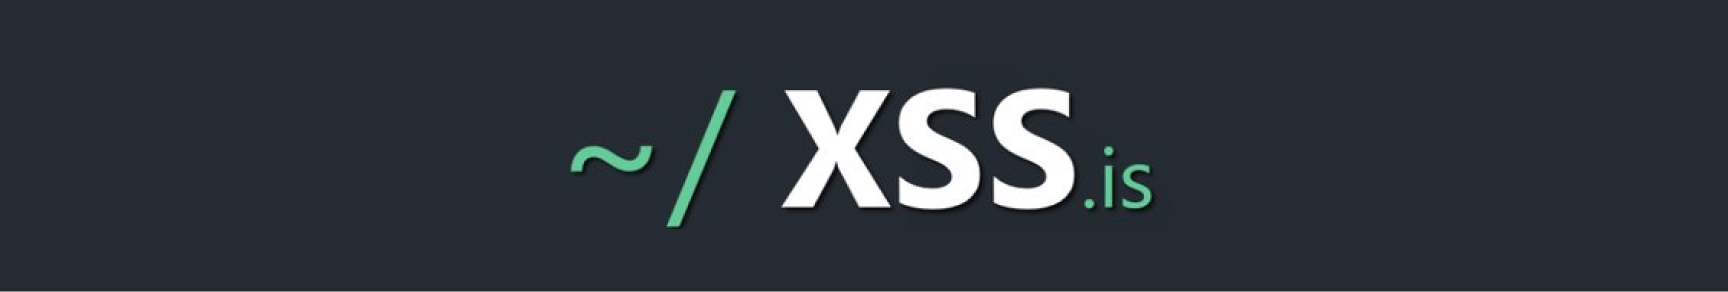 XSS logo